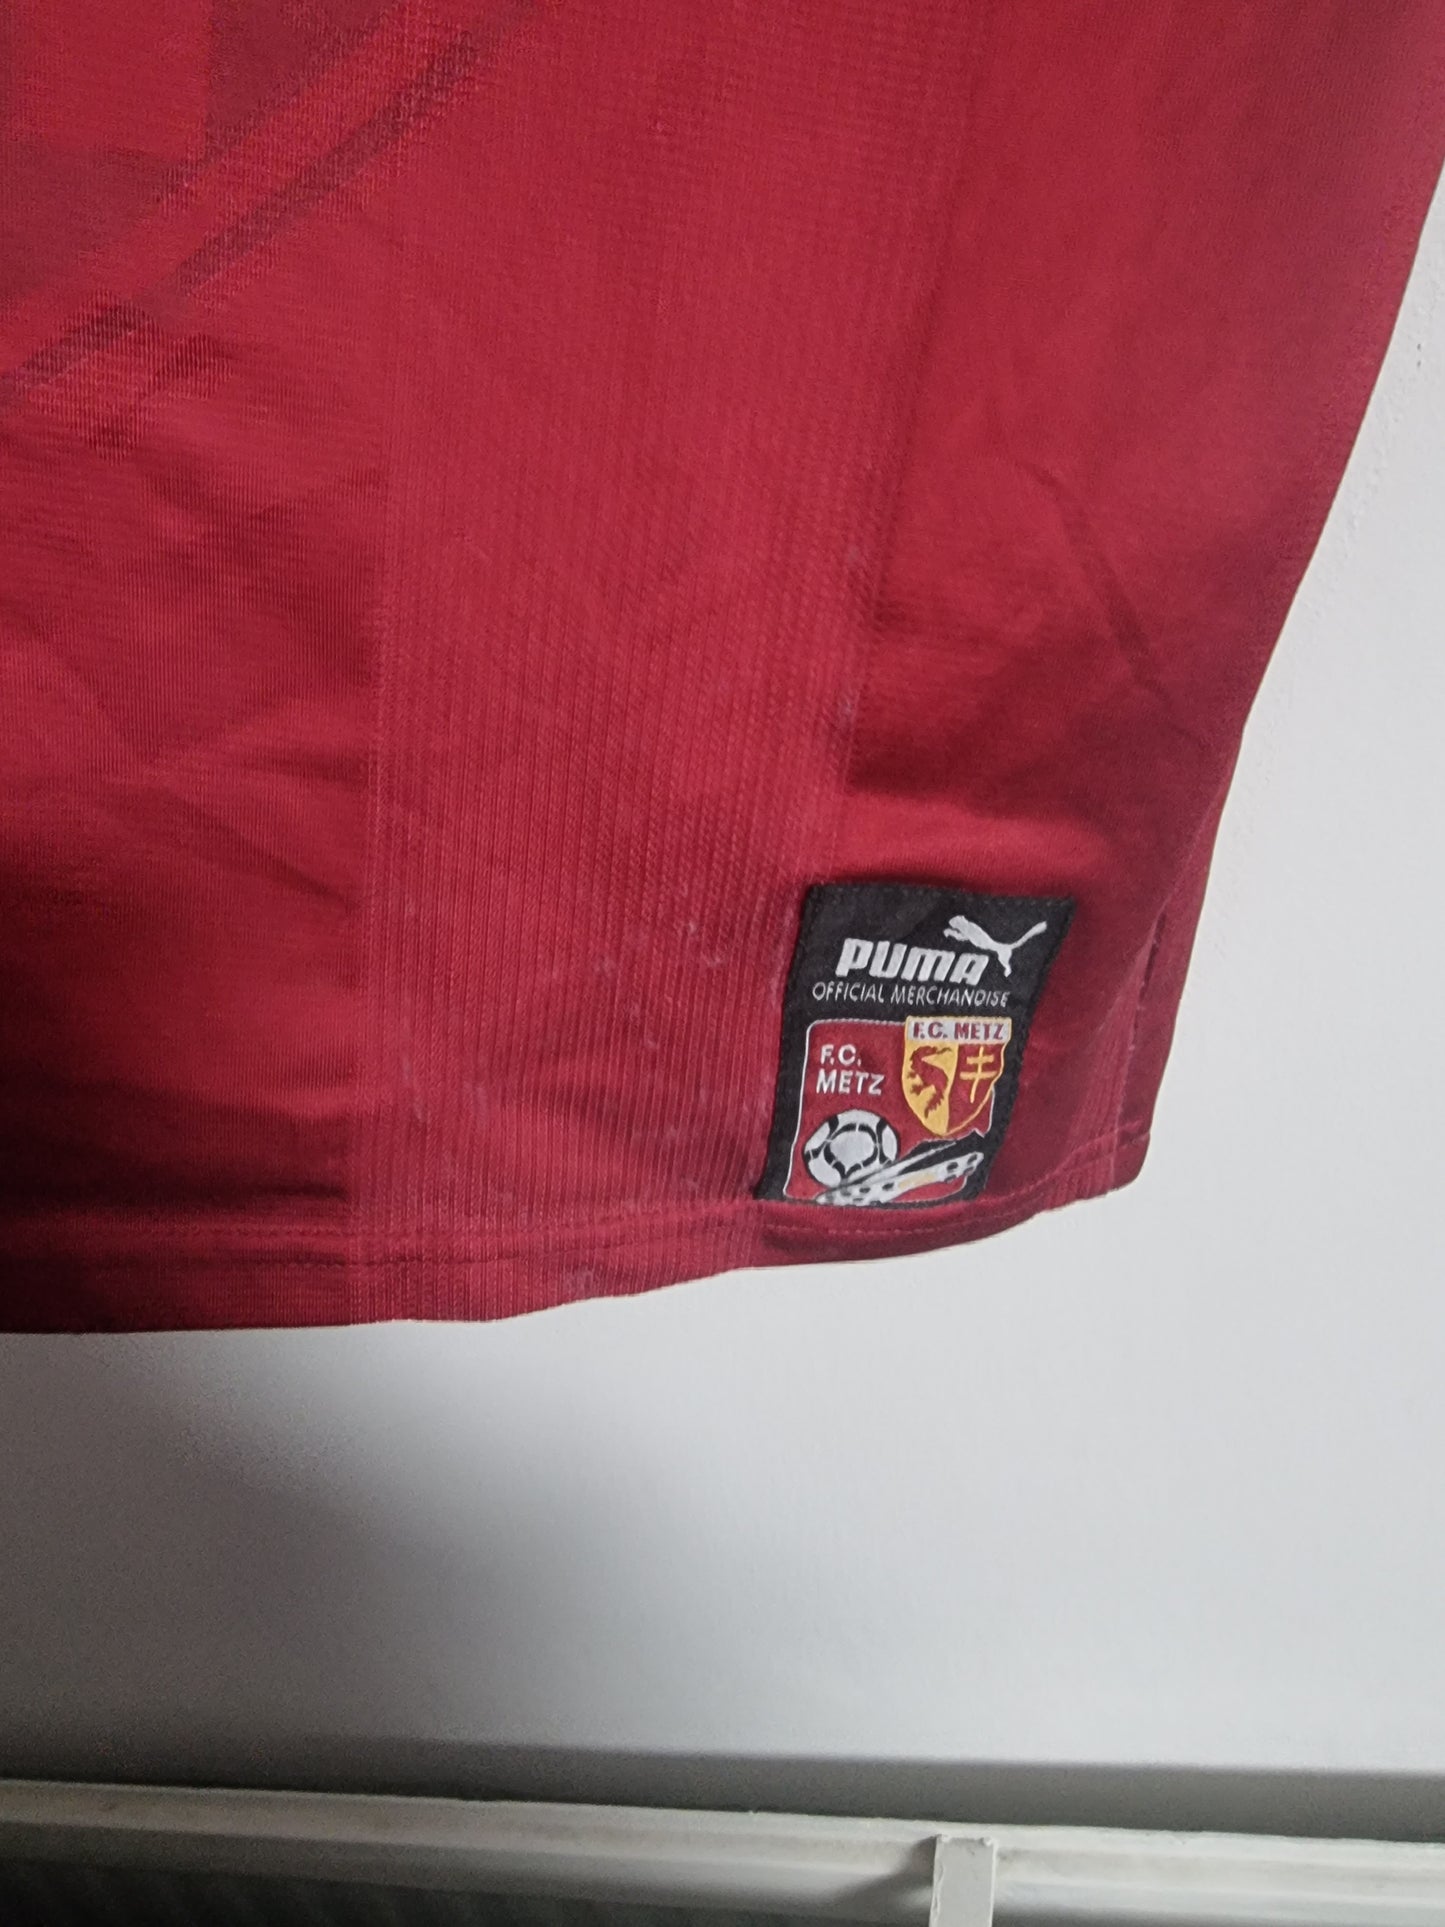 Puma Metz 97/98 Home Shirt Large